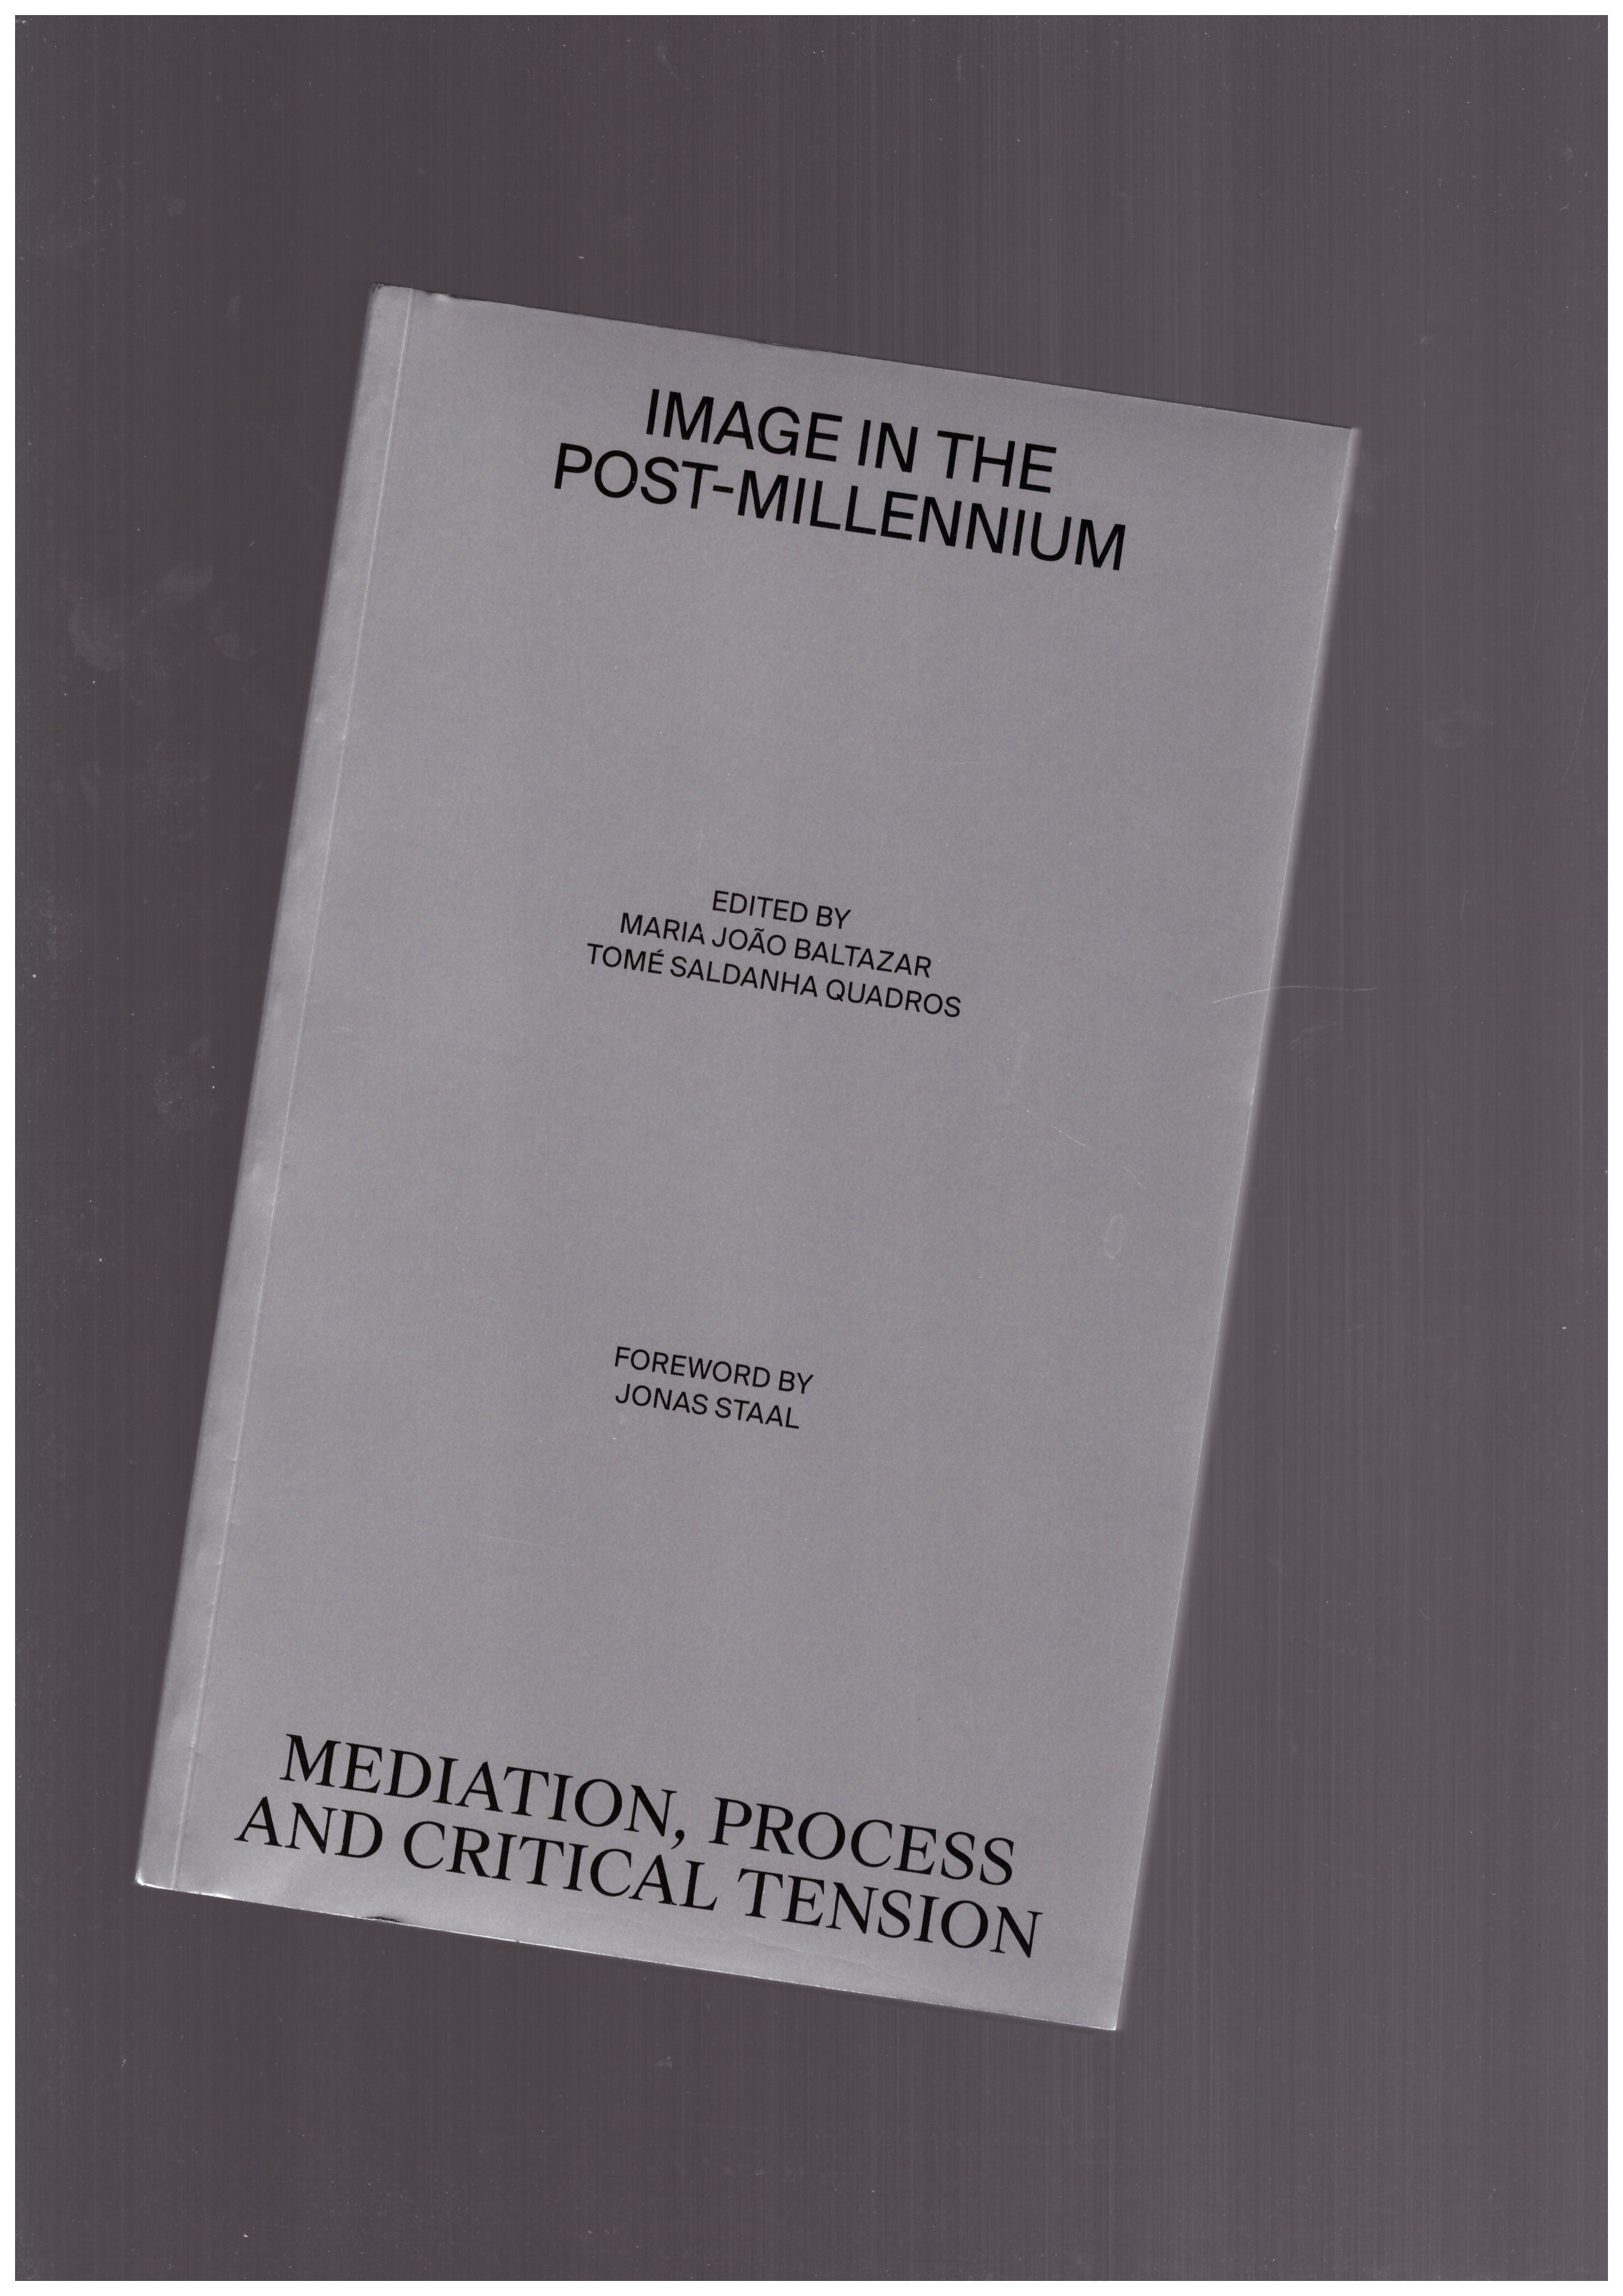 JOÃO BALTAZAR, Maria; SALDANHA QUADROS, Tomé (eds.) - Image in the post-millenium